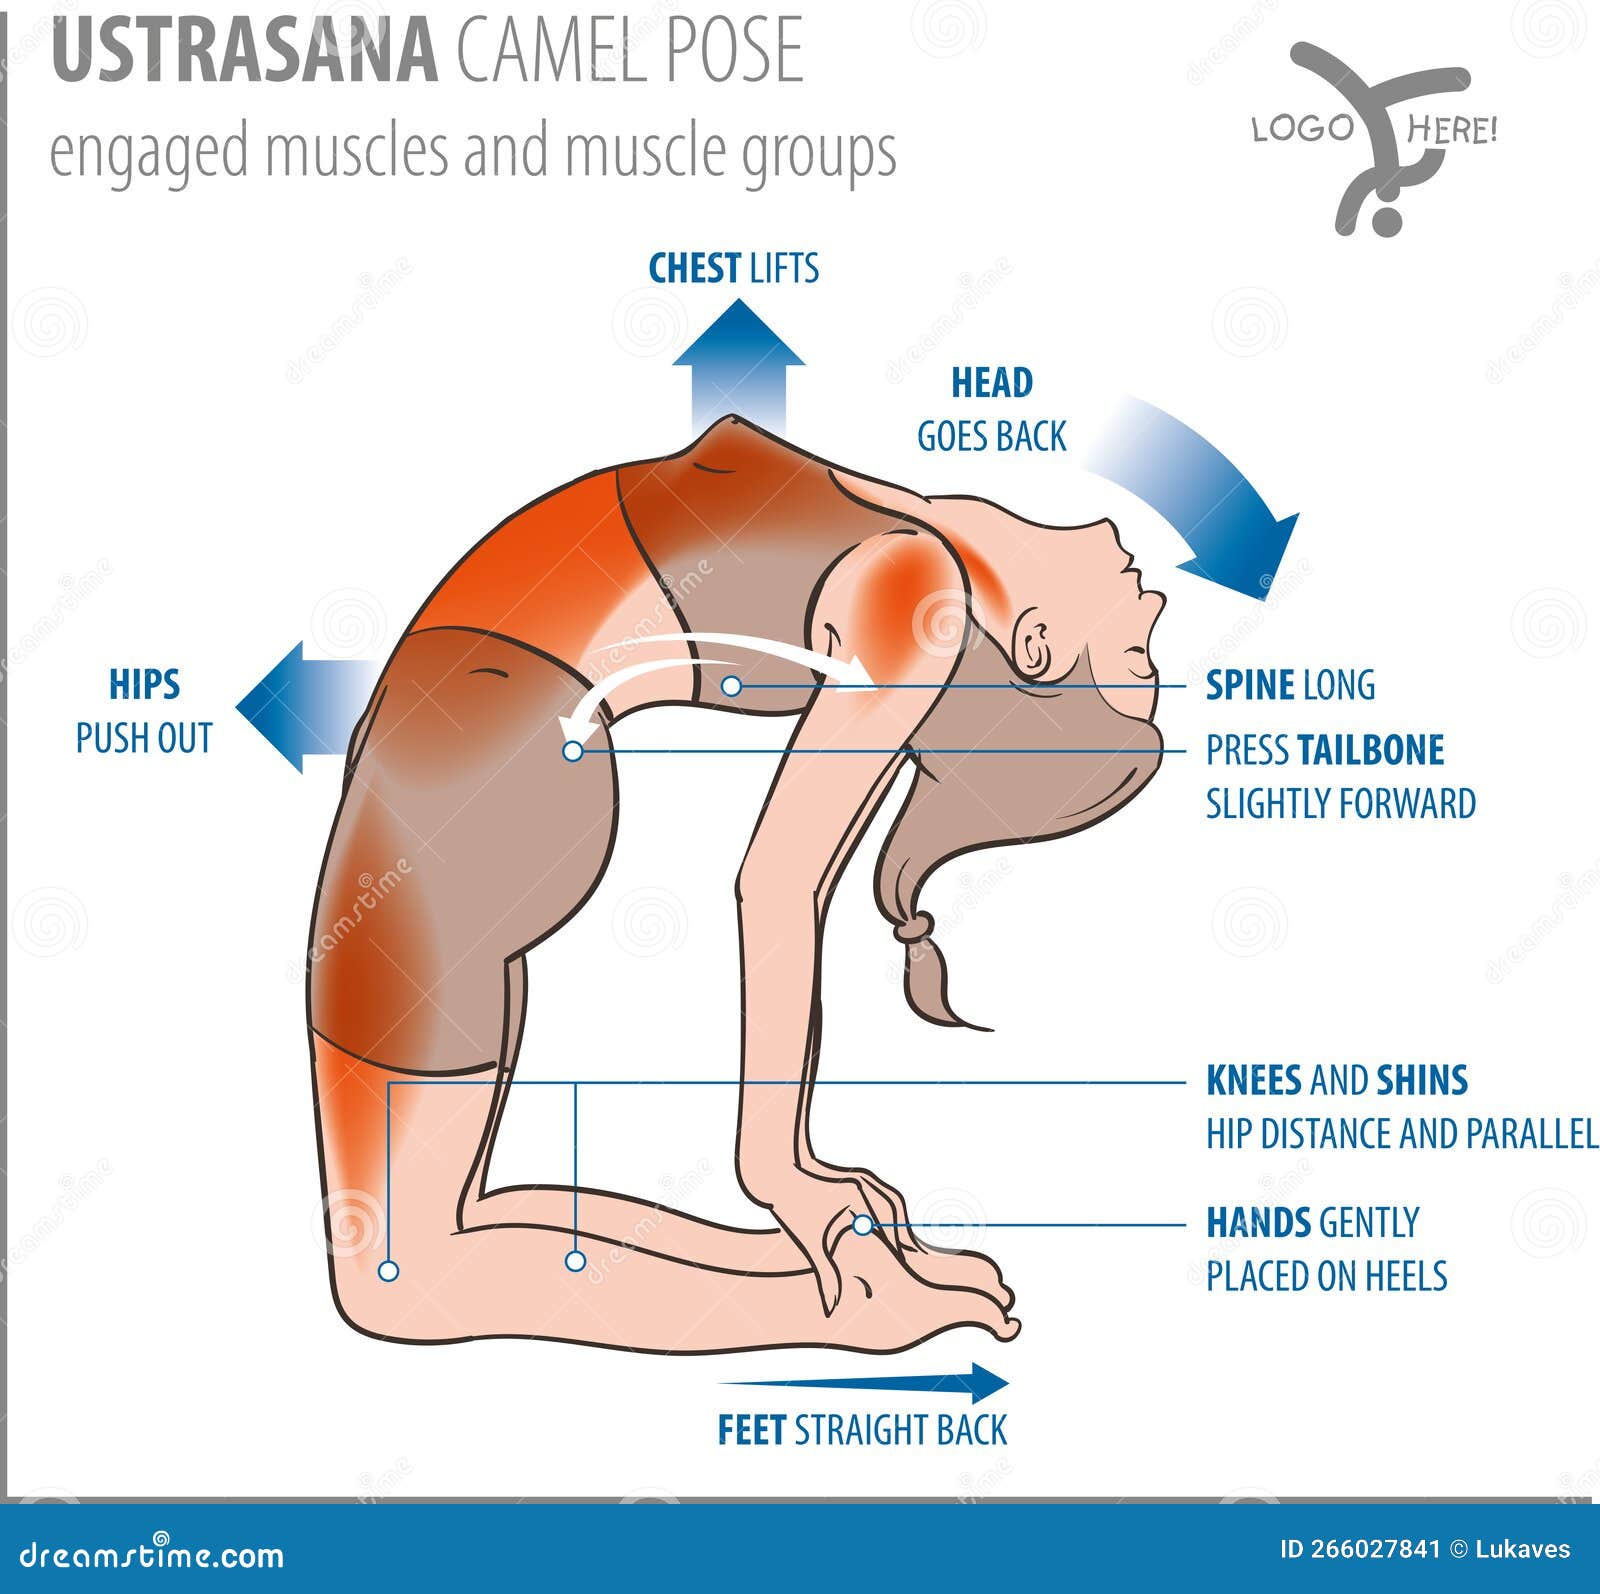 Ustrasana: Camel Pose 101 - Zuda Yoga